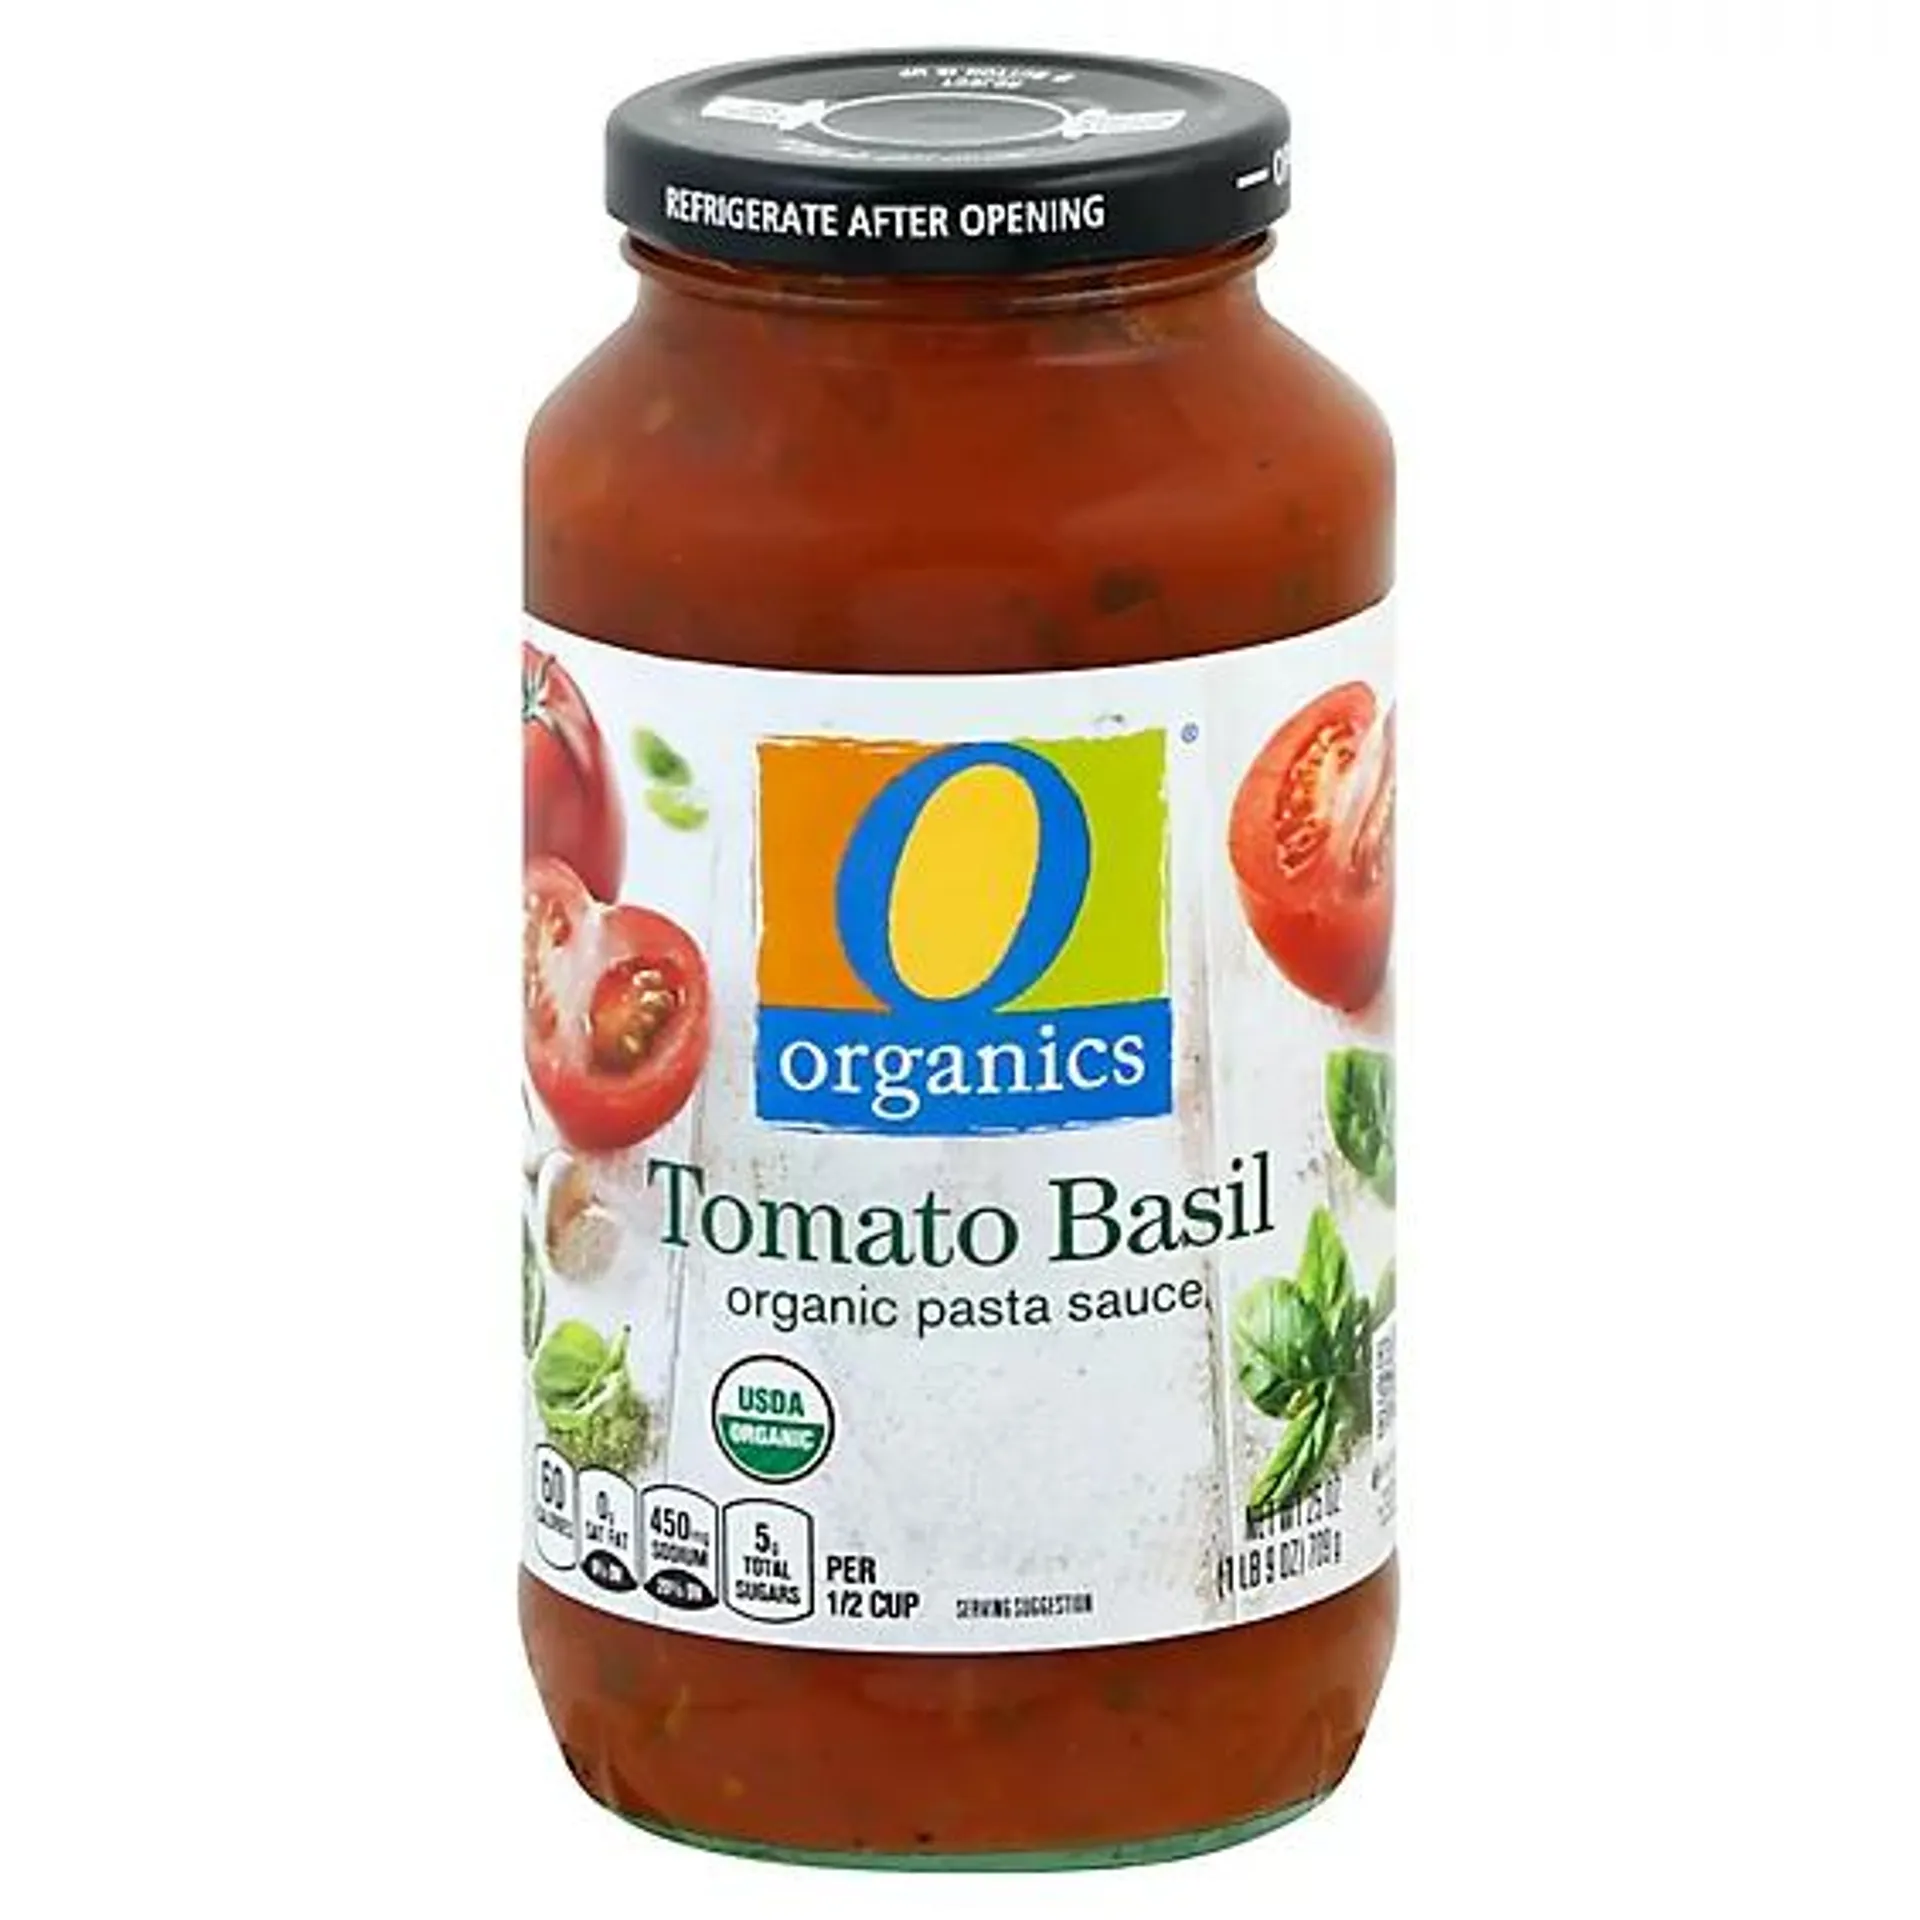 O Organics Organic Pasta Sauce Tomato Basil - 25 Oz